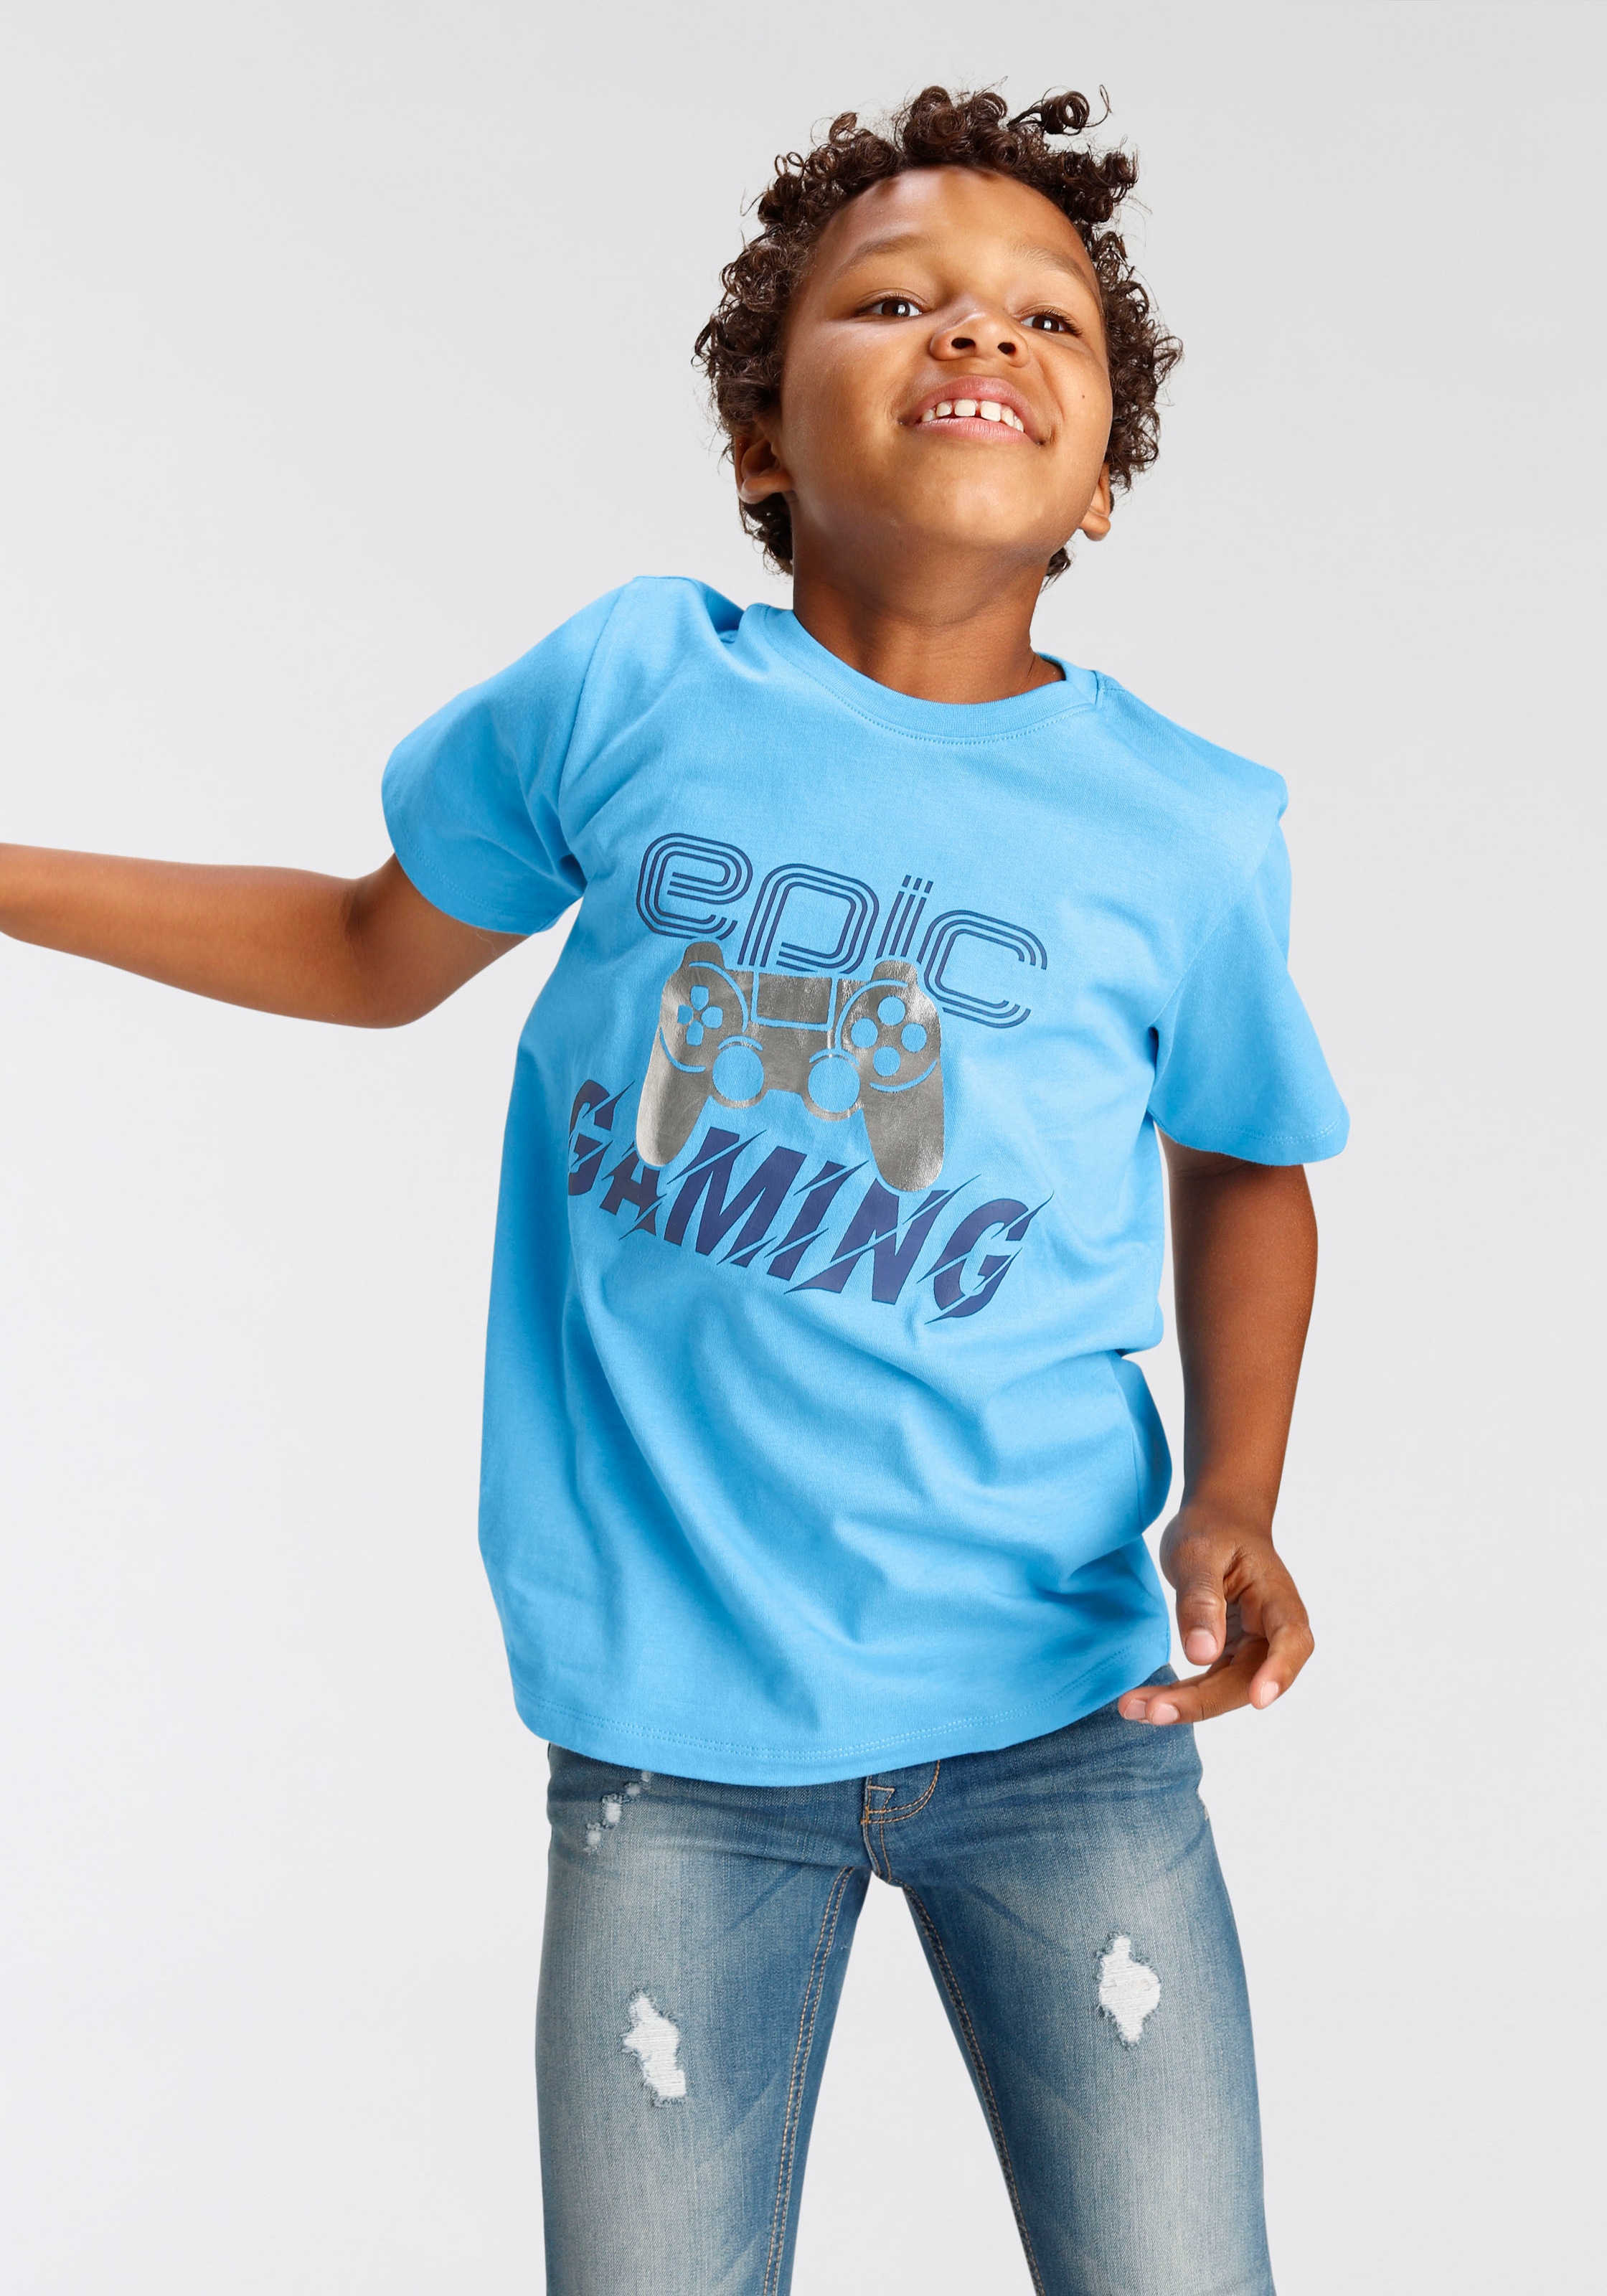 KIDSWORLD »EPIC GAMING«, Folienprint bei T-Shirt